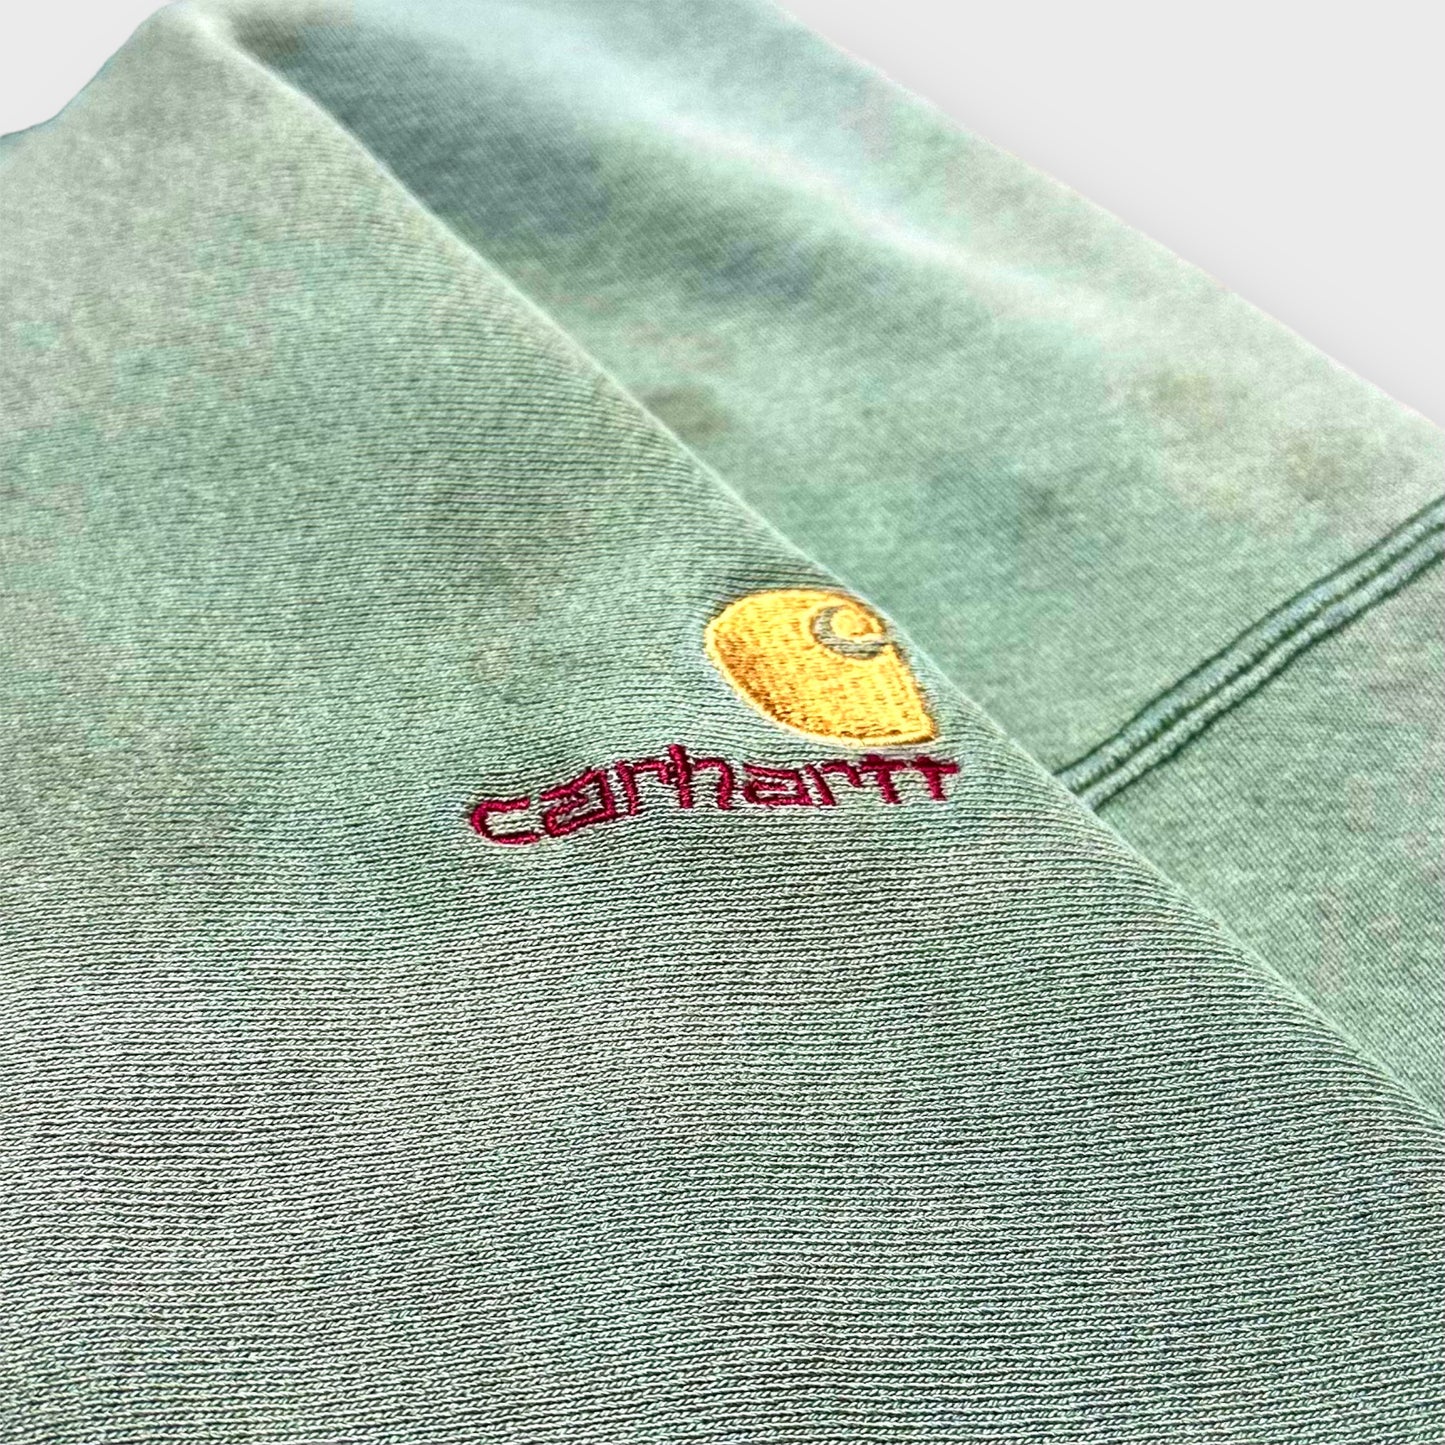 80-90's "Carhartt" Faded logo sweat